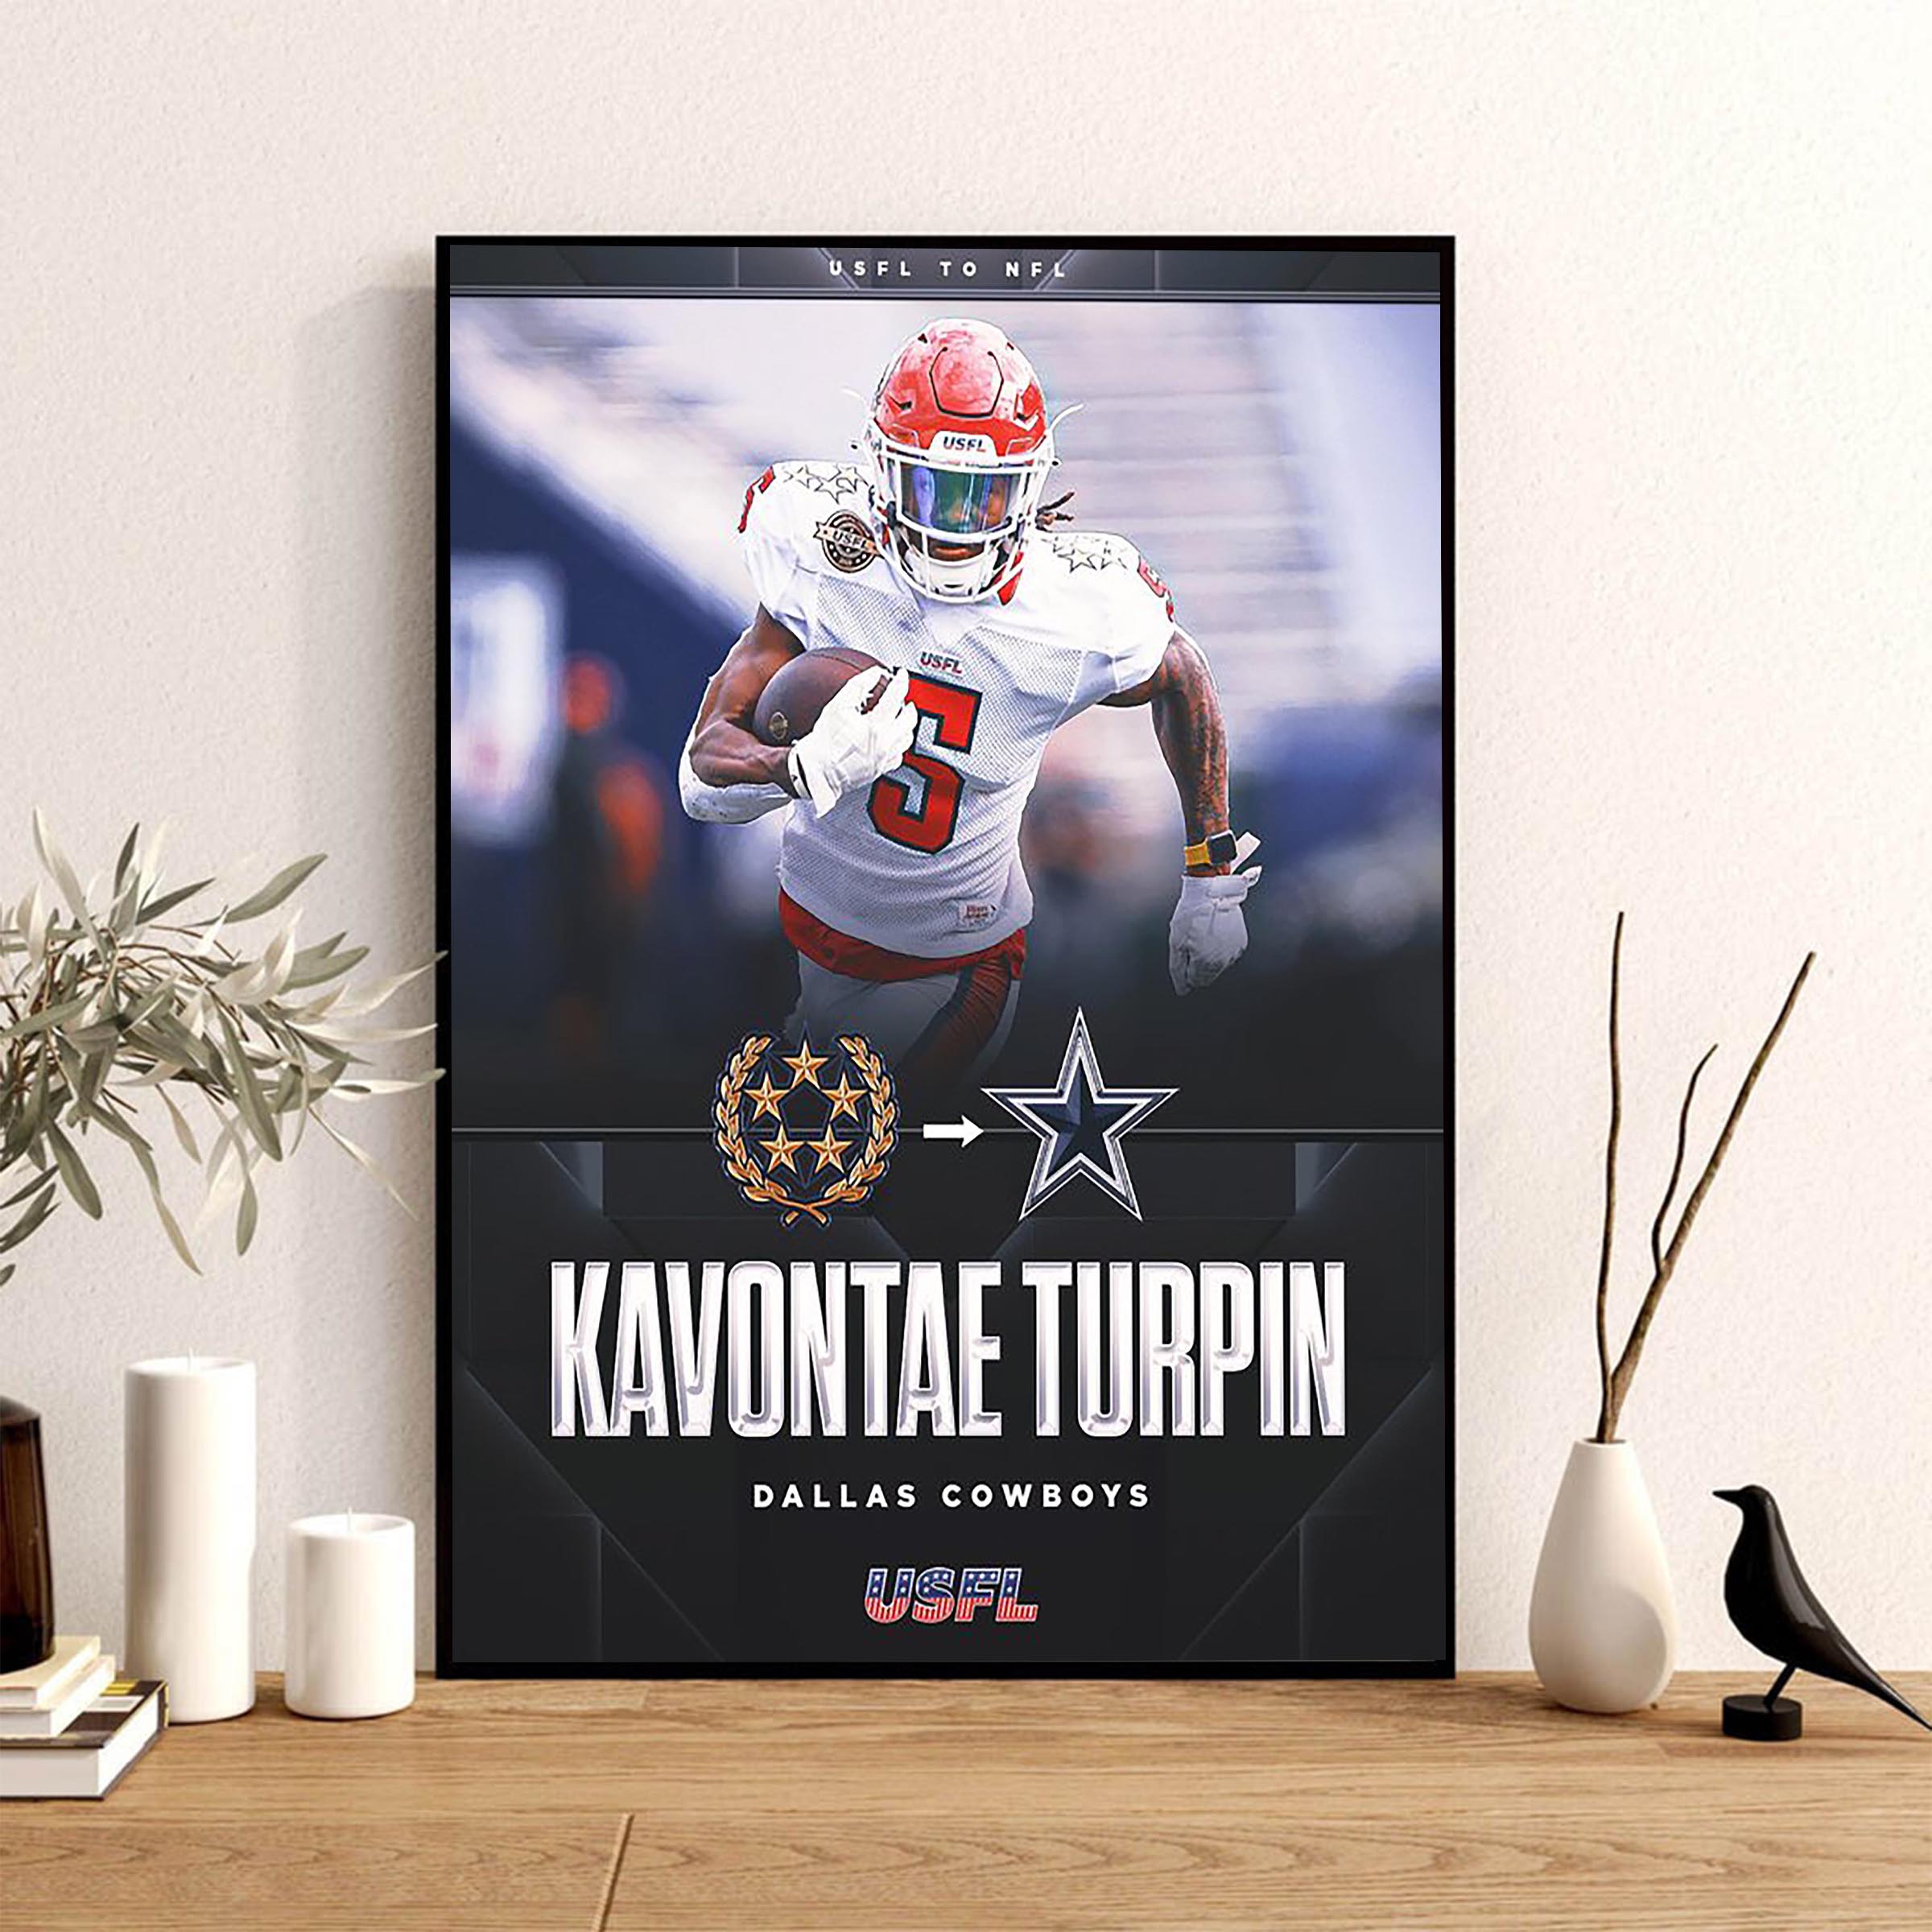 Dallas Cowboys sign WR/KR KaVontae Turpin, USFL MVP - ESPN